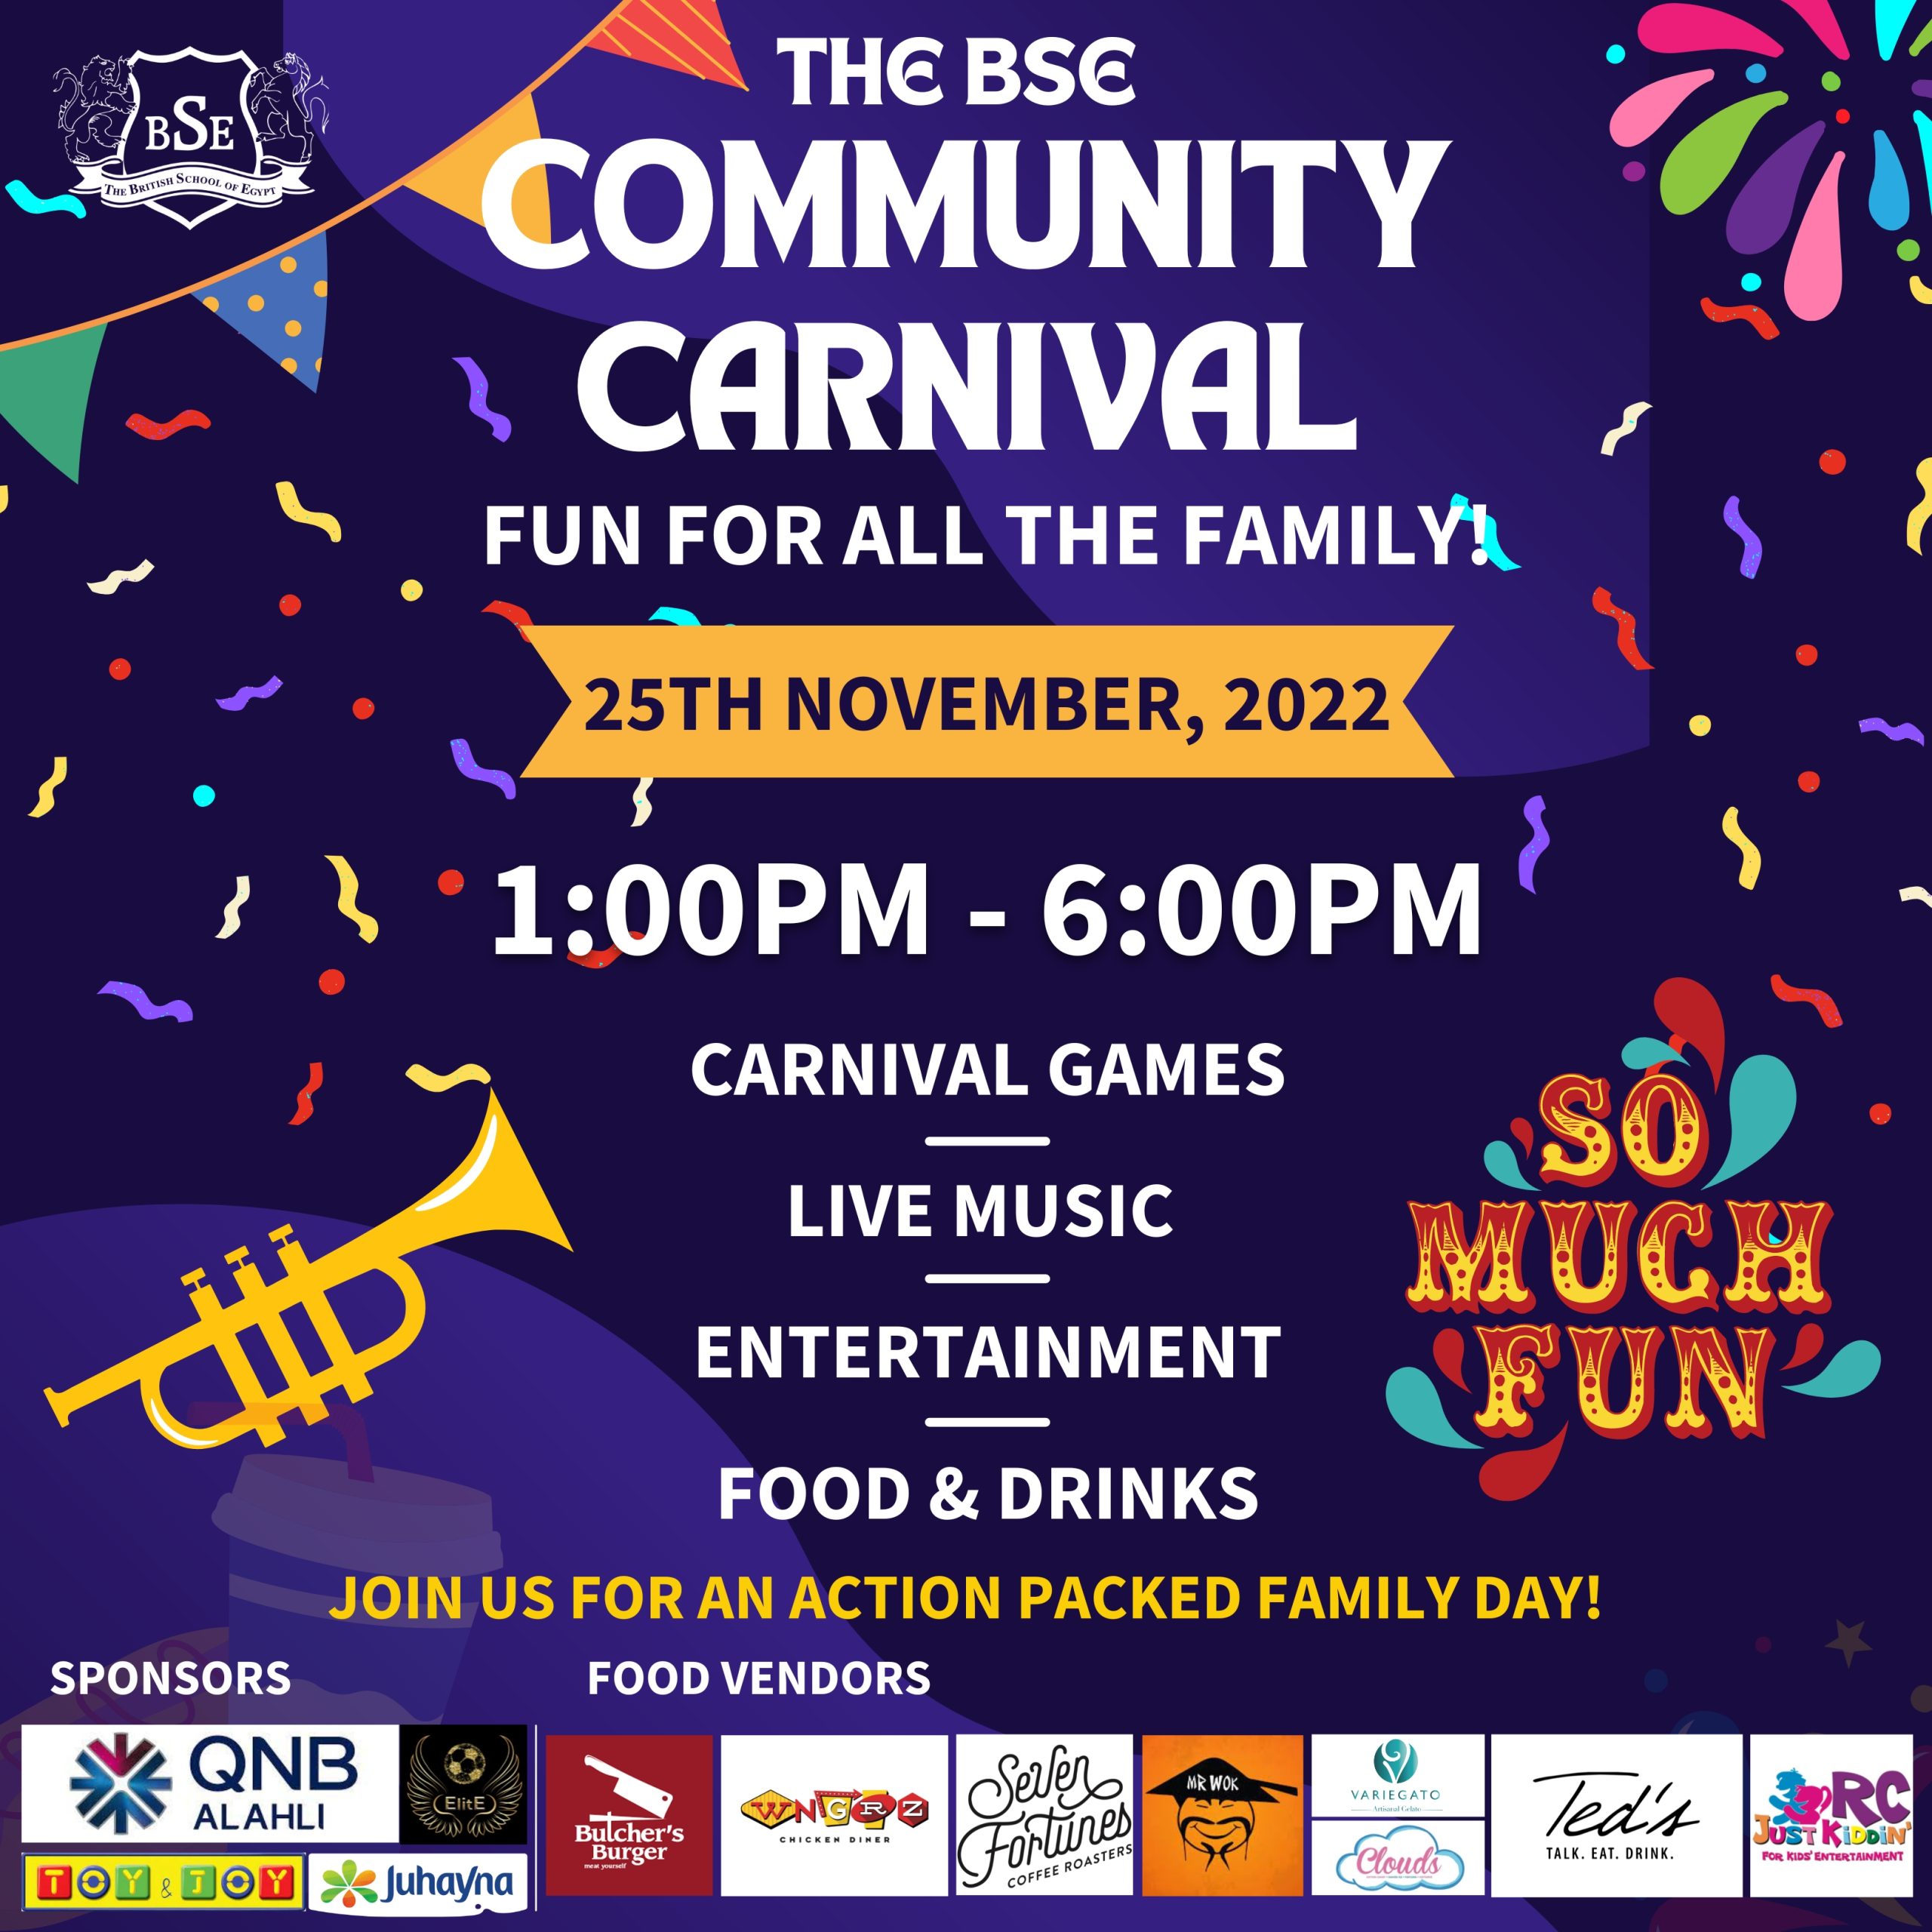  BSE Community Carnival